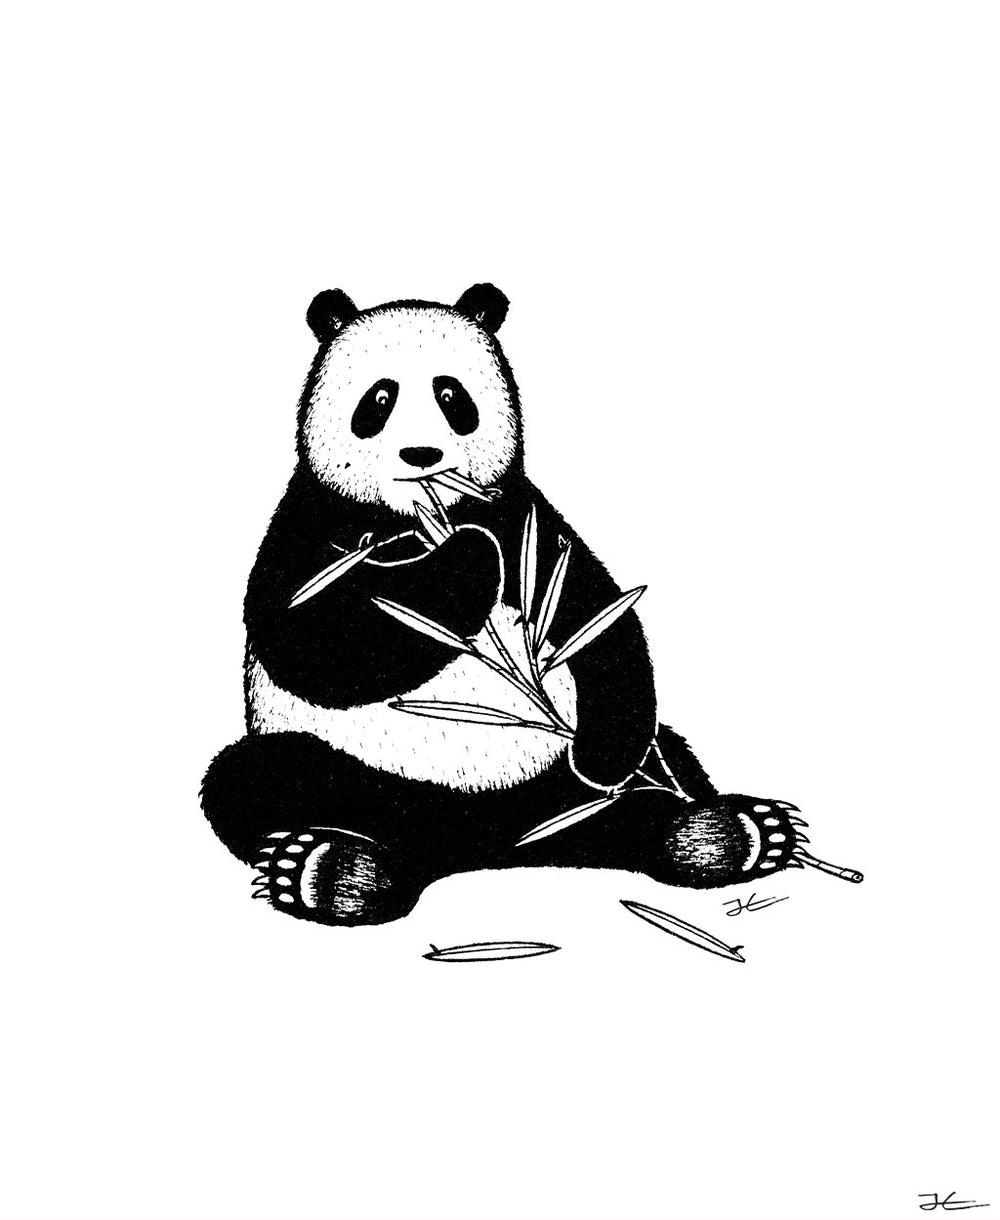 Inktober Panda - Print/ Framed Print